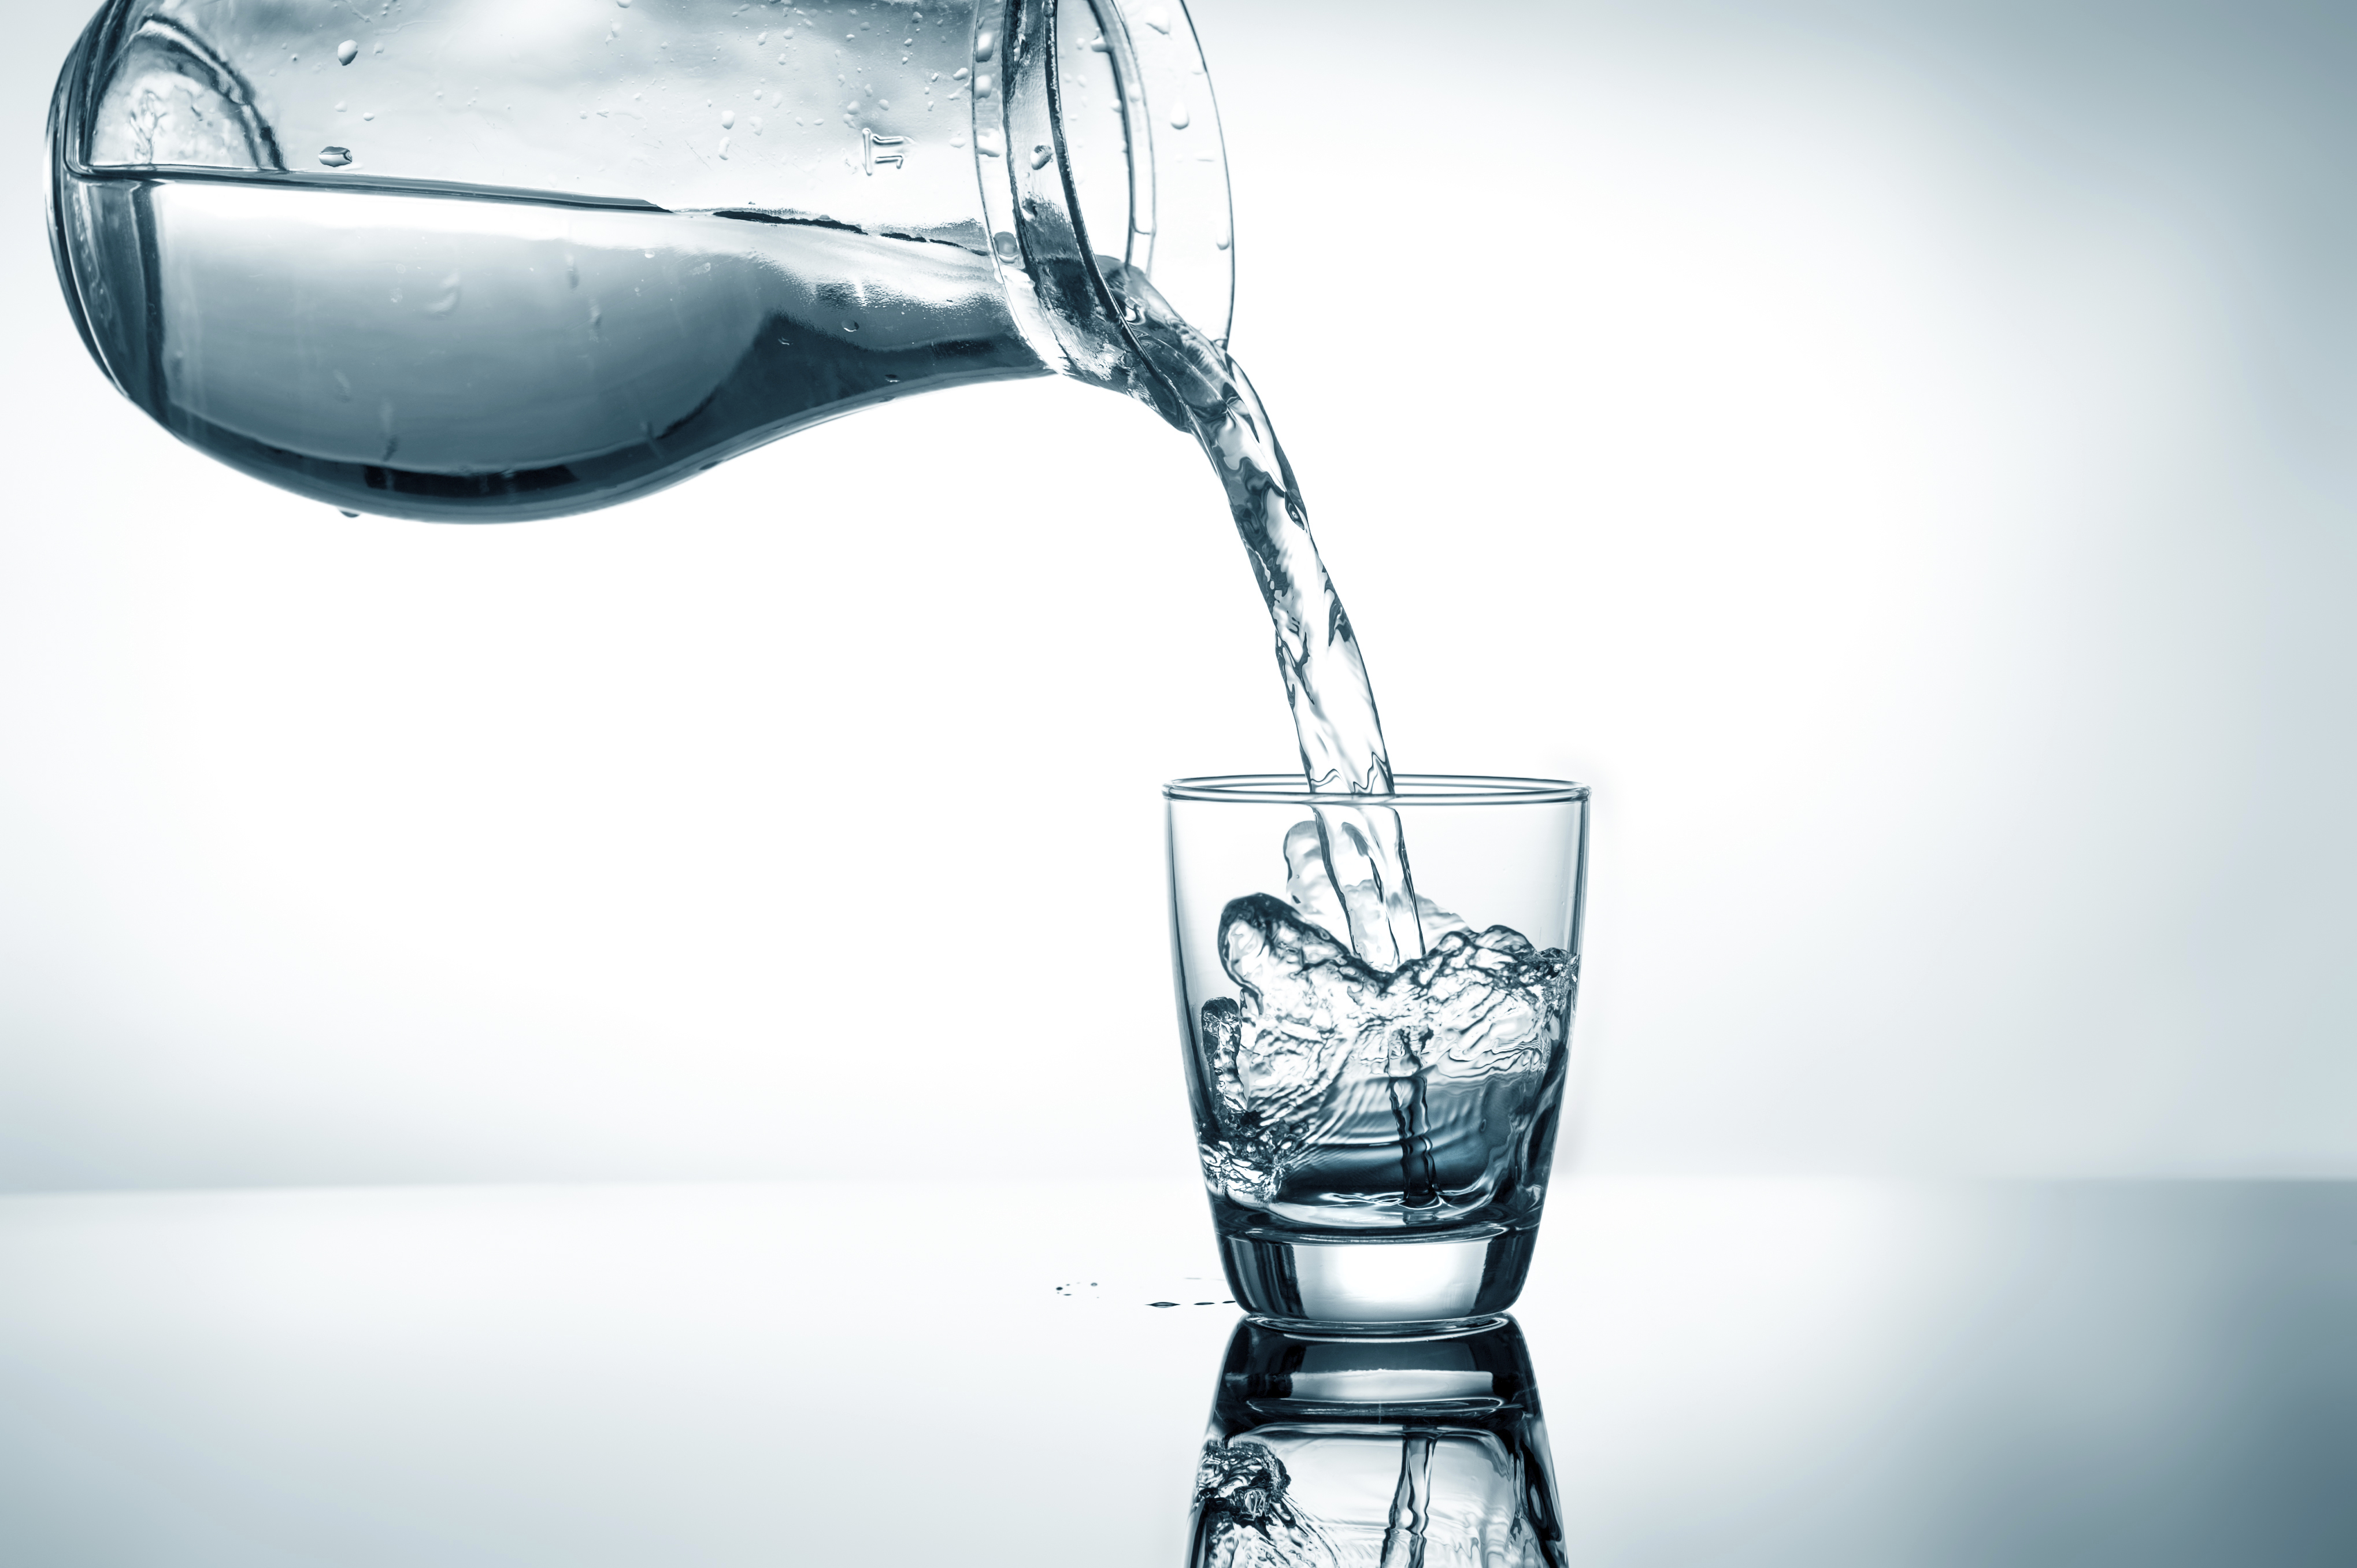 Включи стакан воды. Стакан воды. Вода льется в стакан. Наливает воду. Воду наливают в стакан.